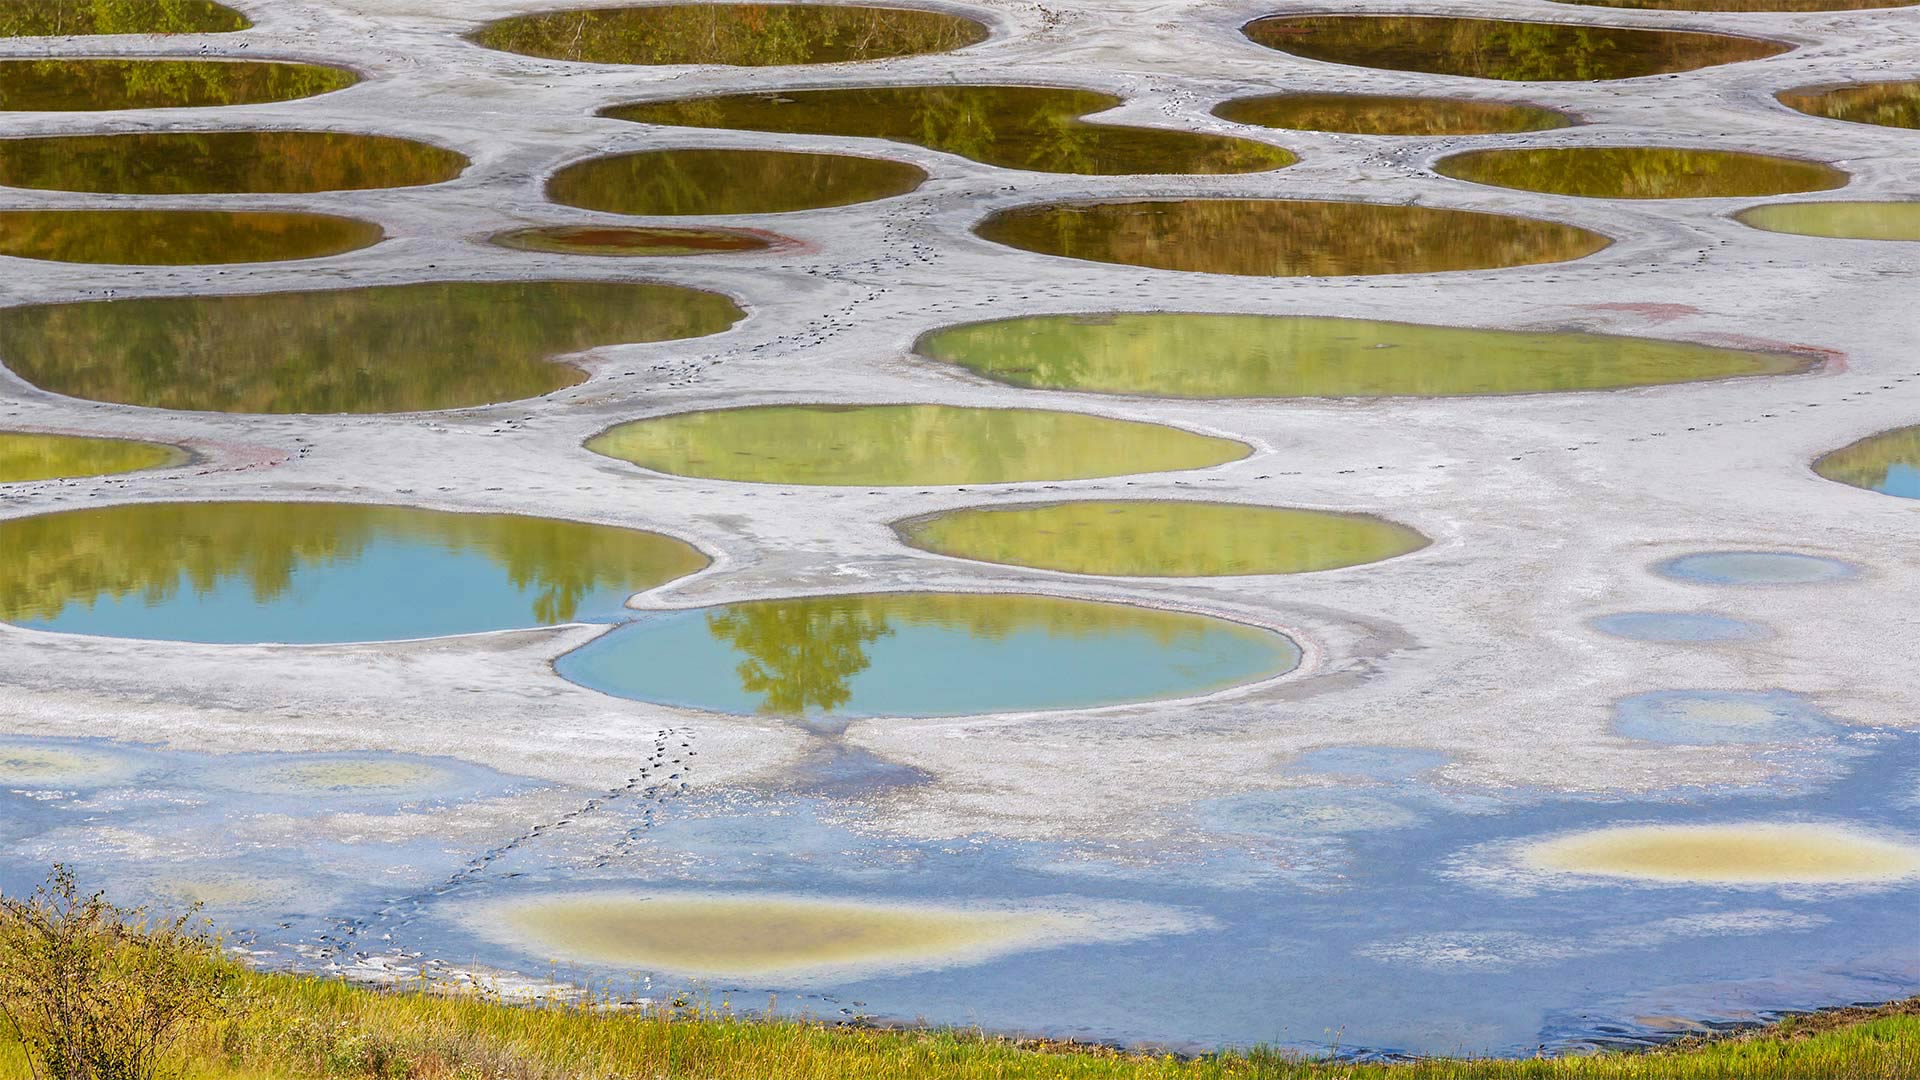 Spotted Lake in the Okanagan region of British Columbia, Canada - Galyna Andrushko/Shutterstock)